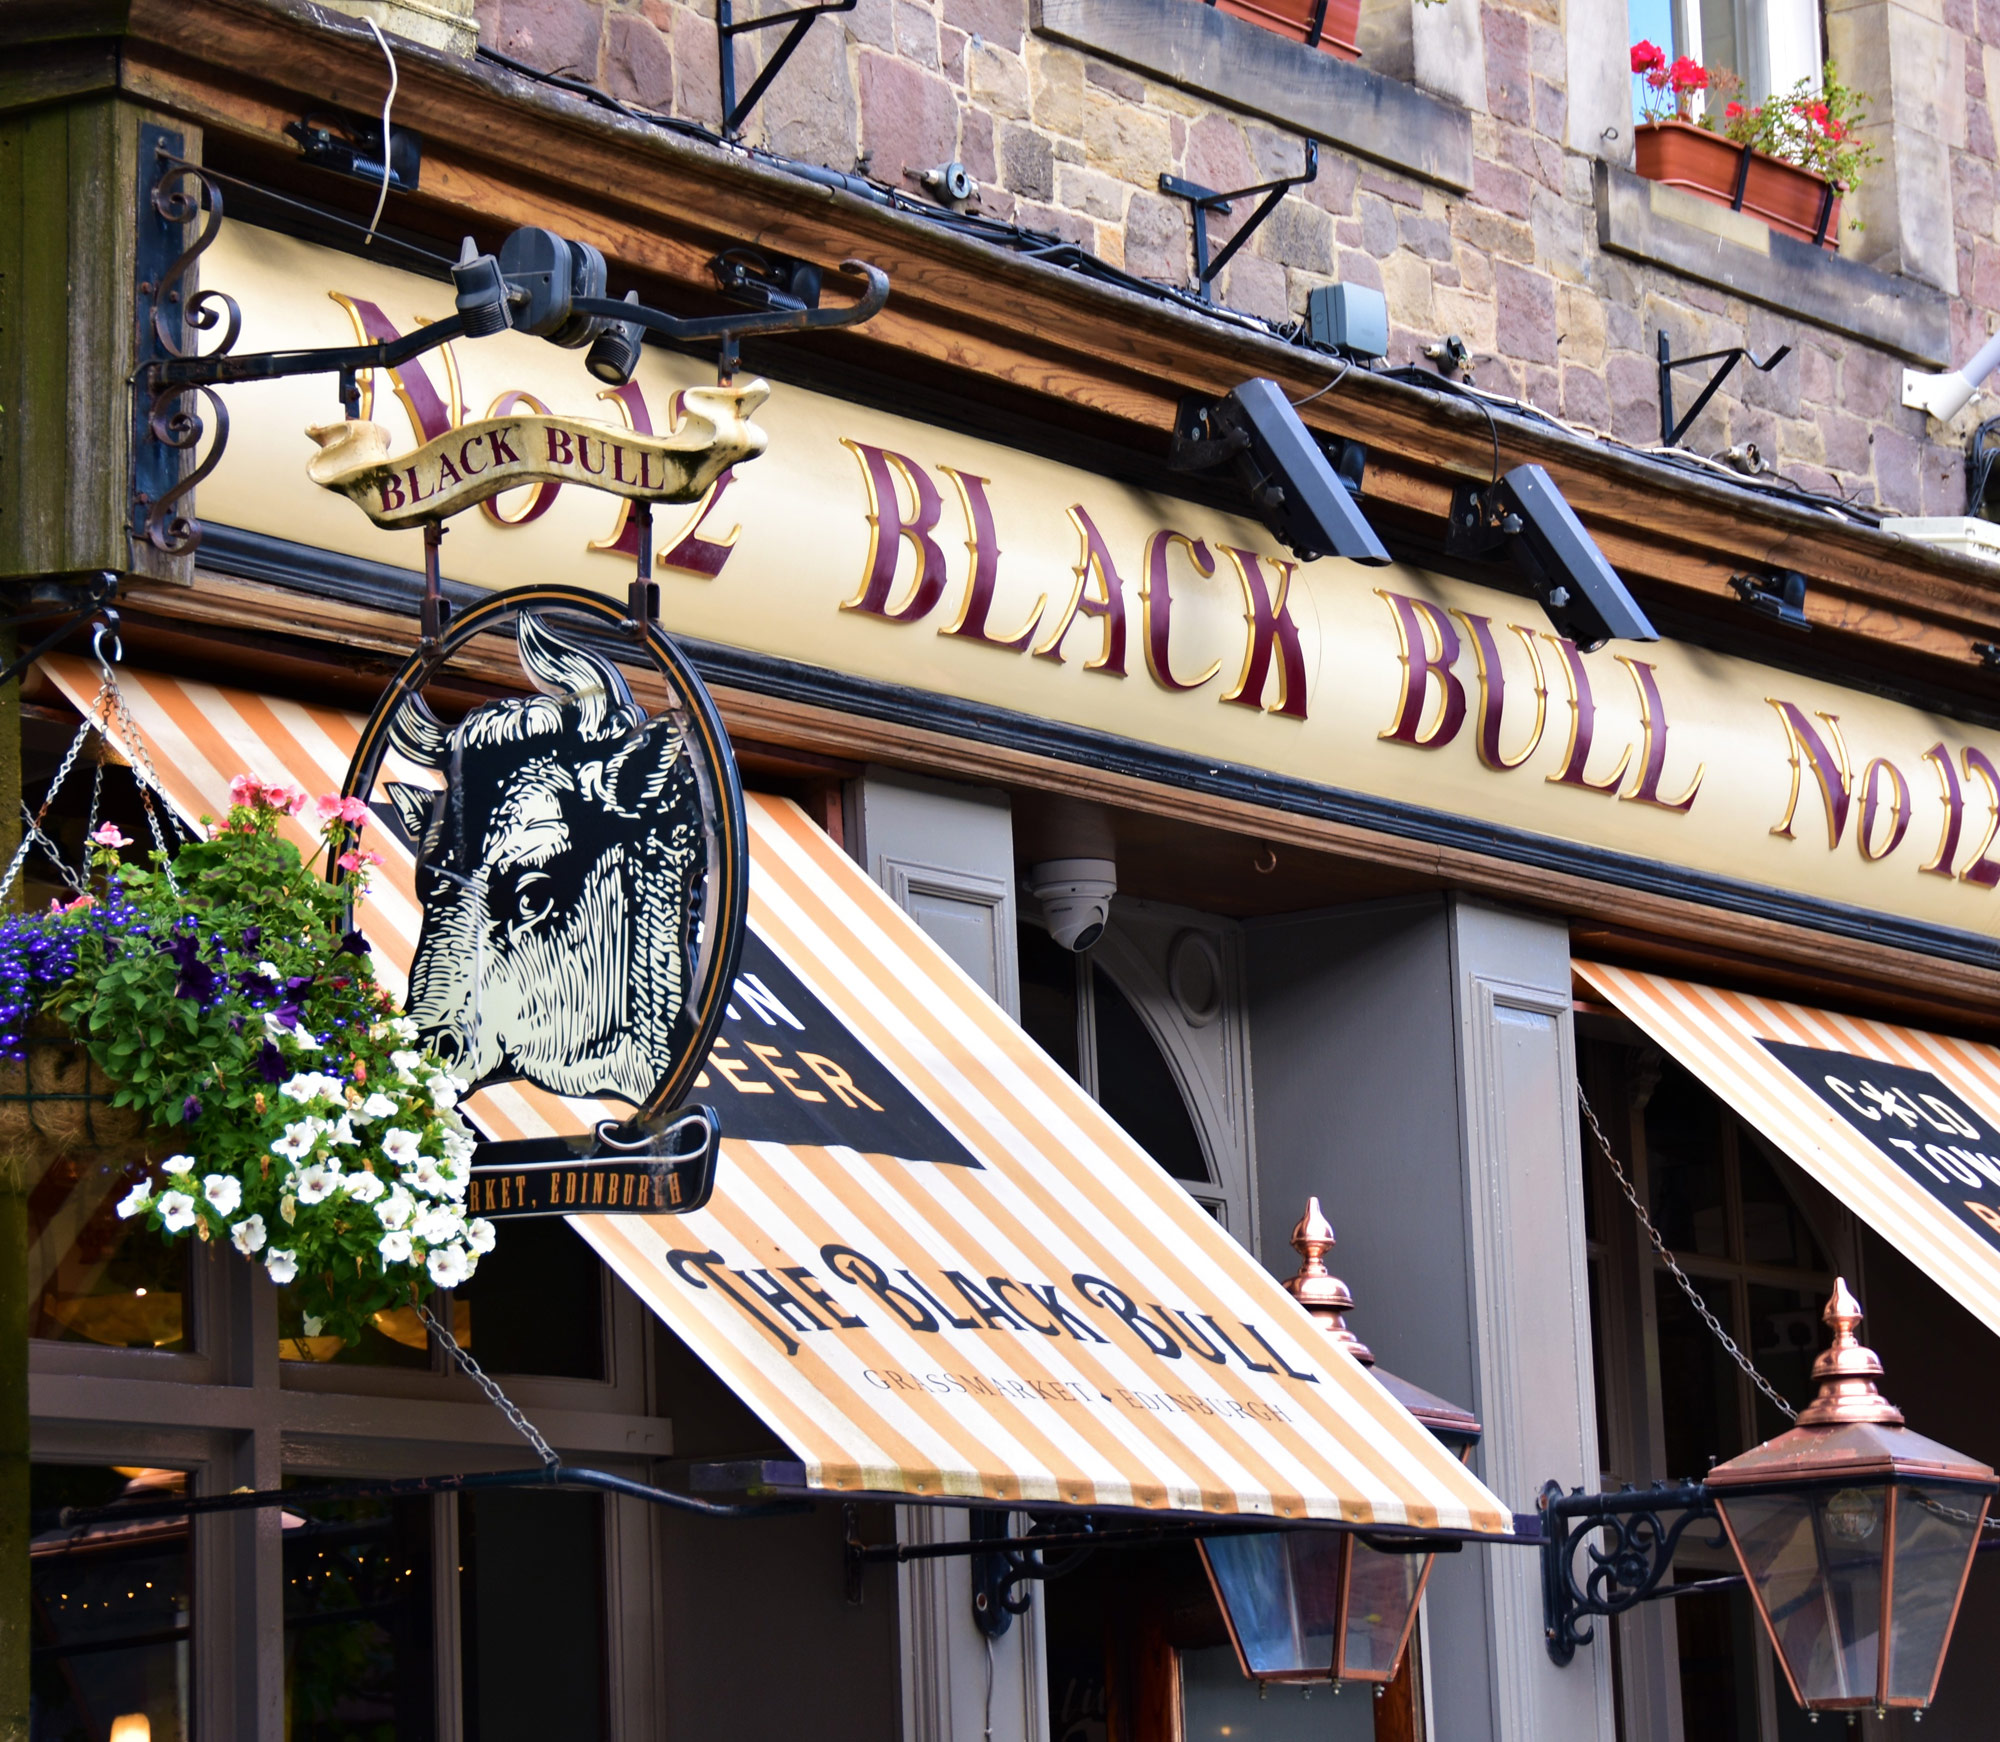 The Black Bull Sports Bar in Edinburgh